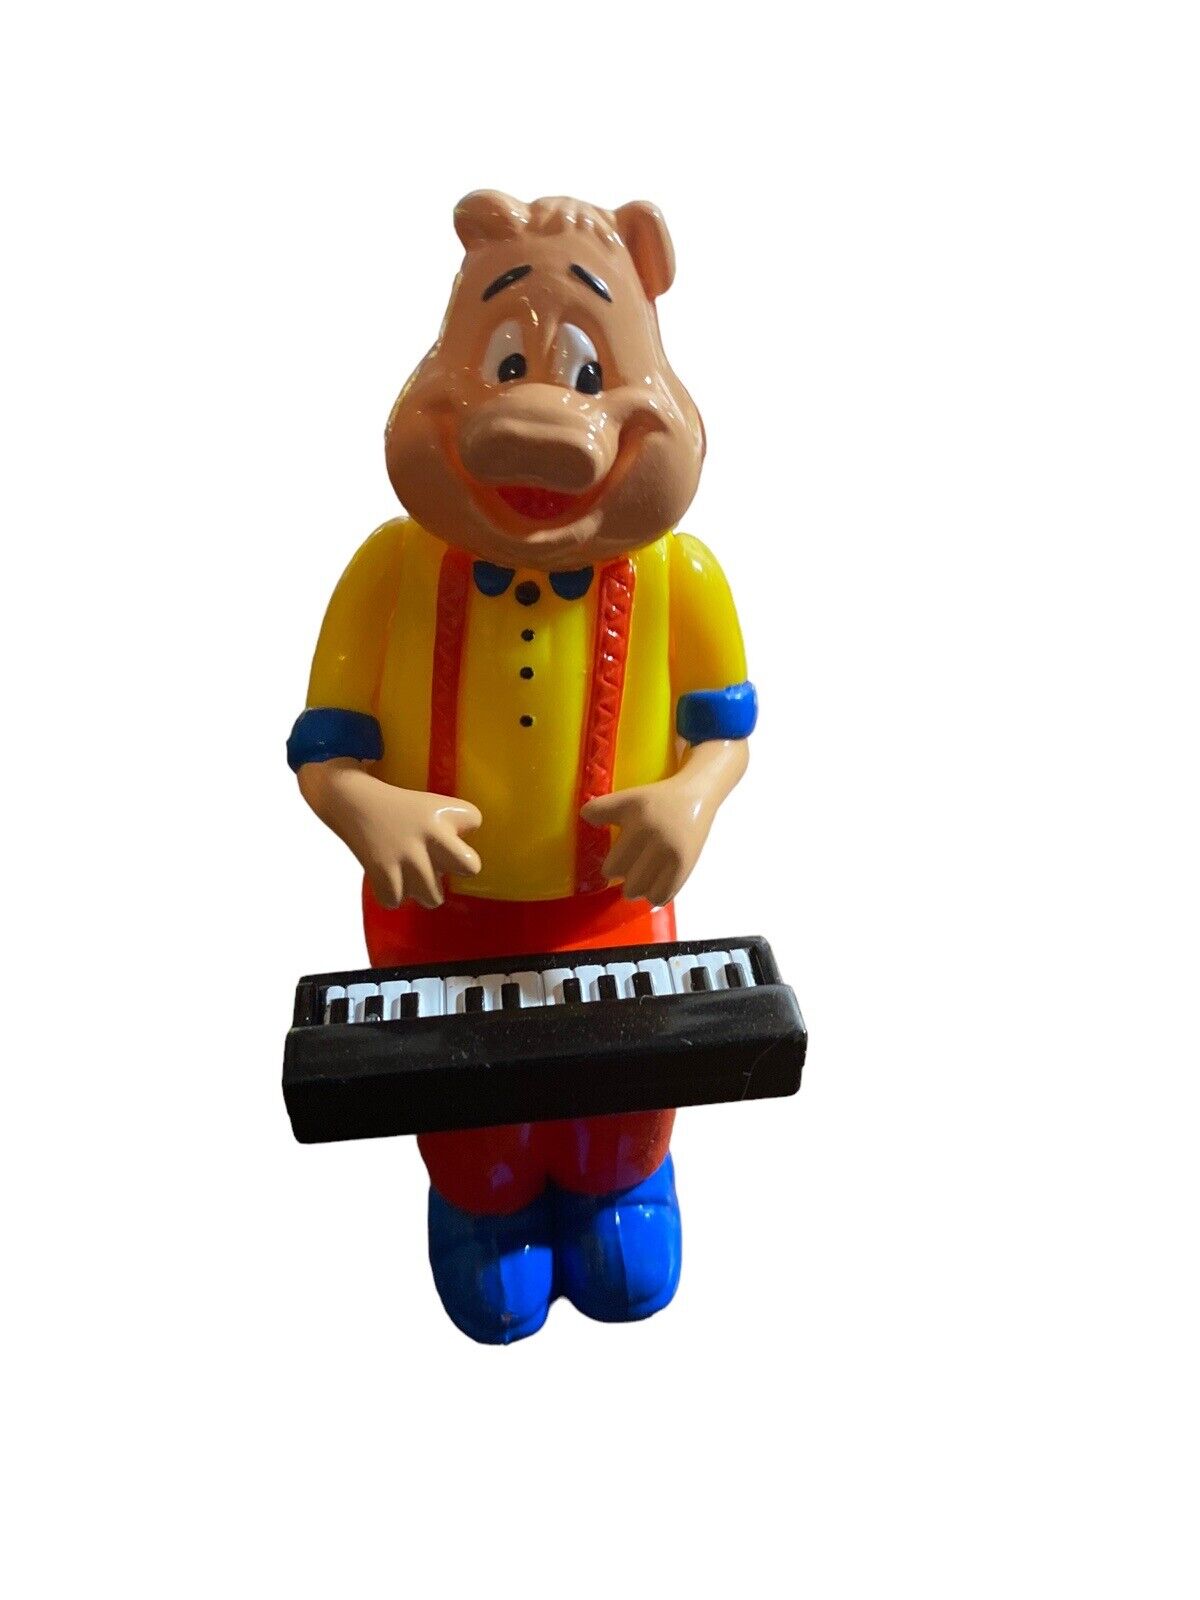 Rare Vintage Pig Playing Piano Keyboard  Bobblehead Figure